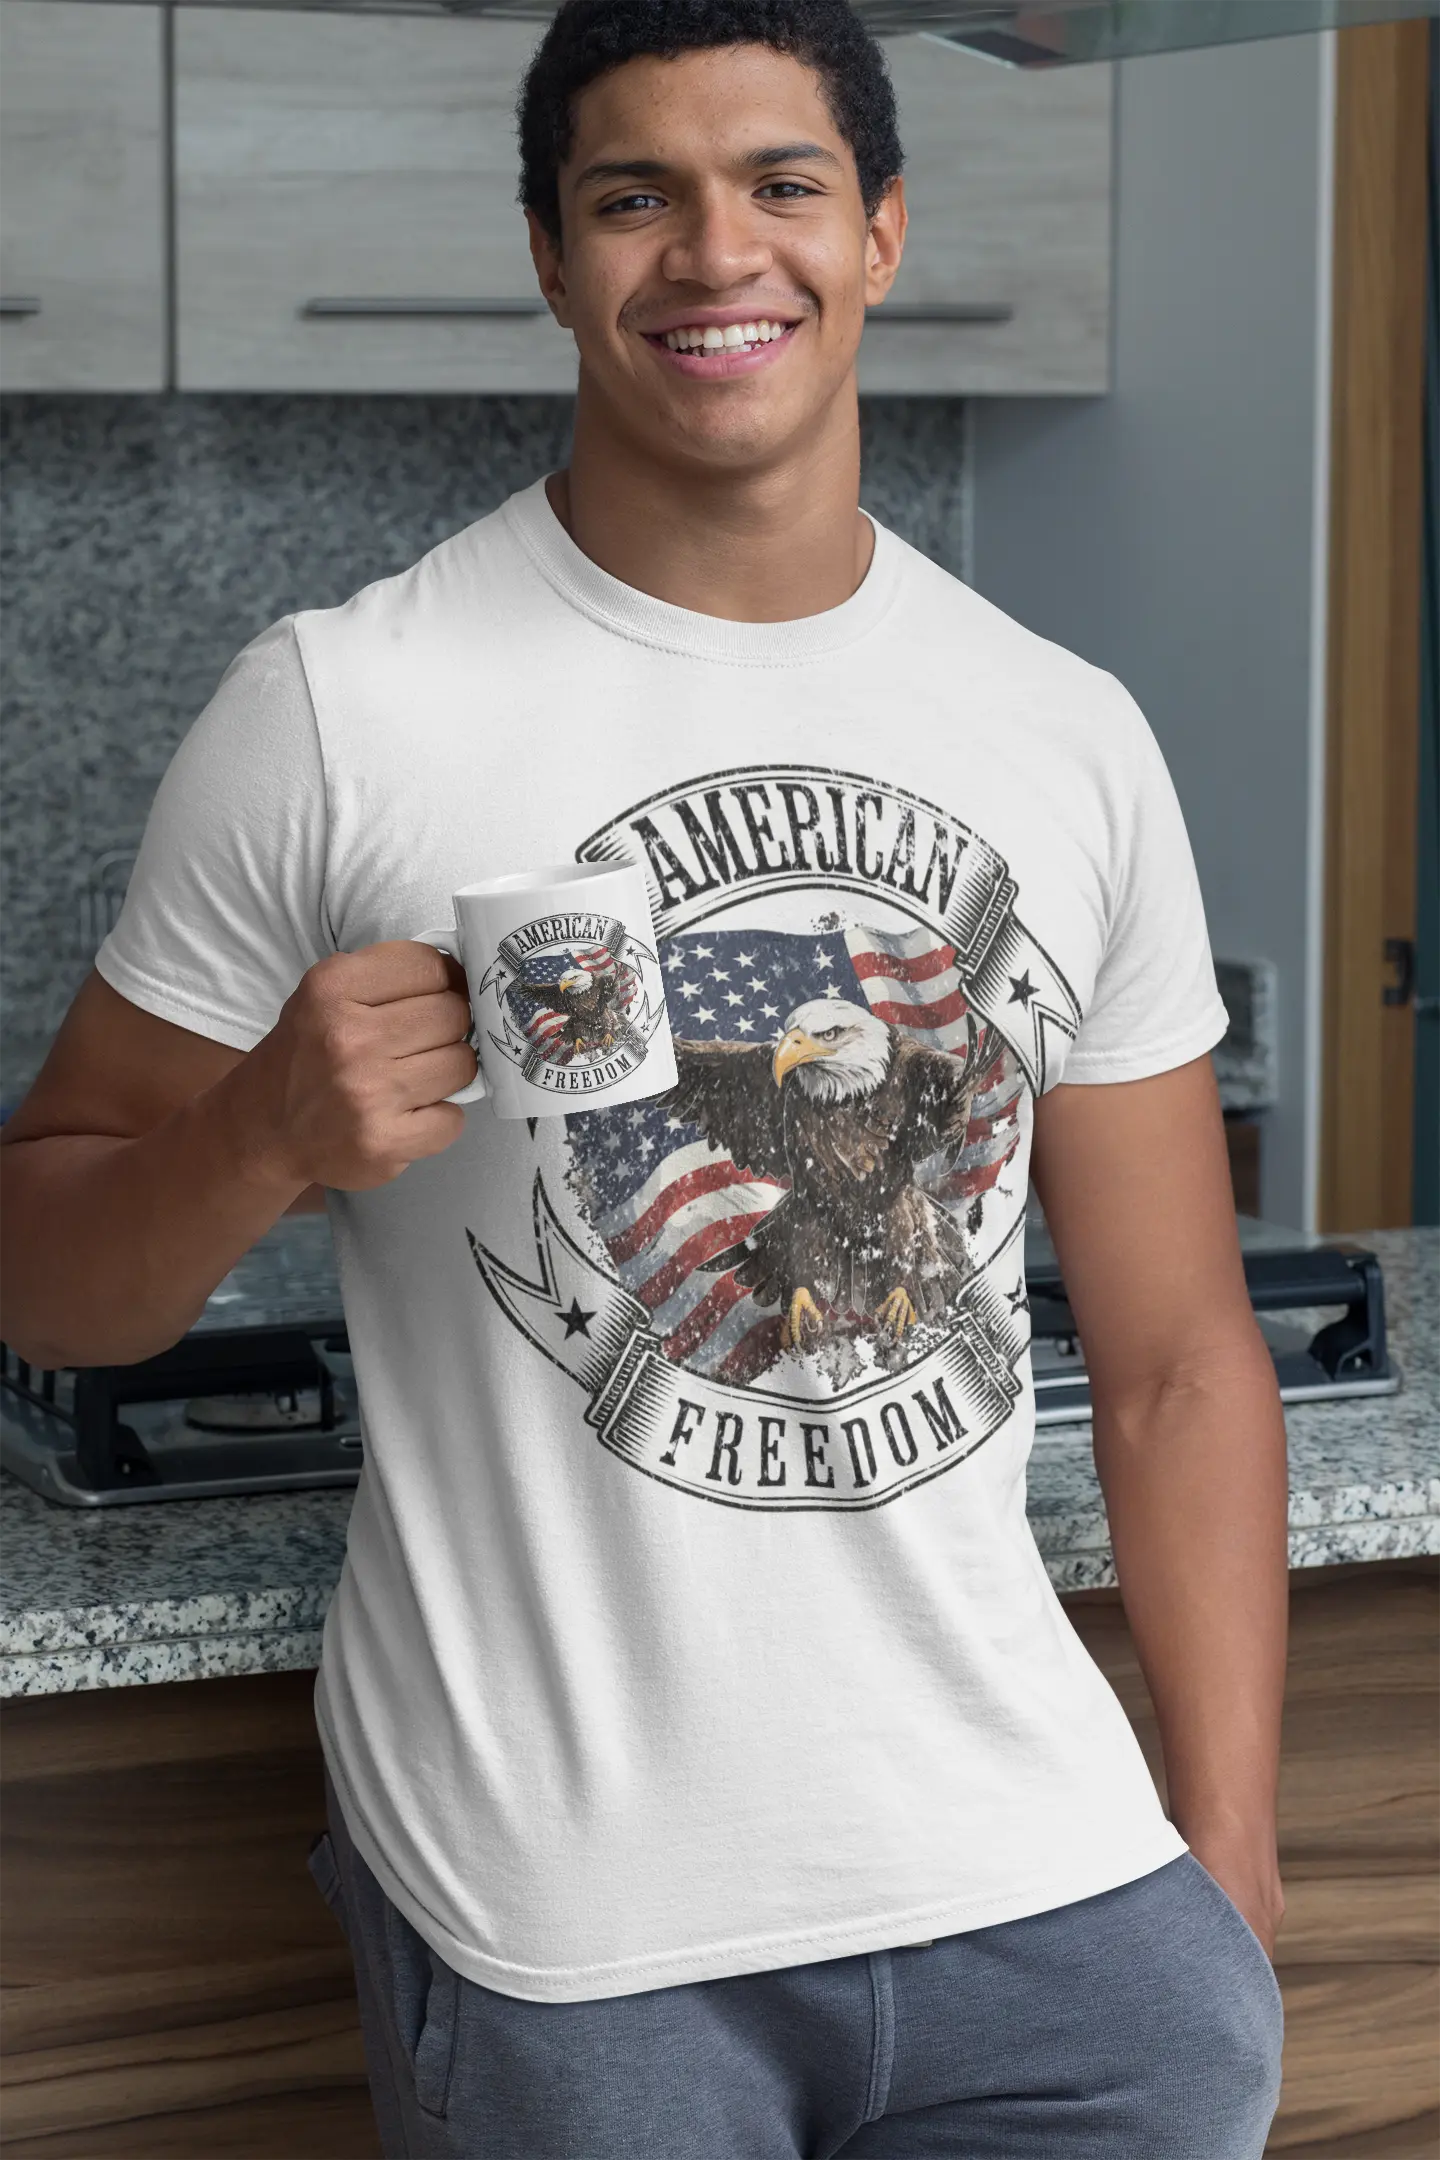 American Freedom Tshirt design, also good on mugs